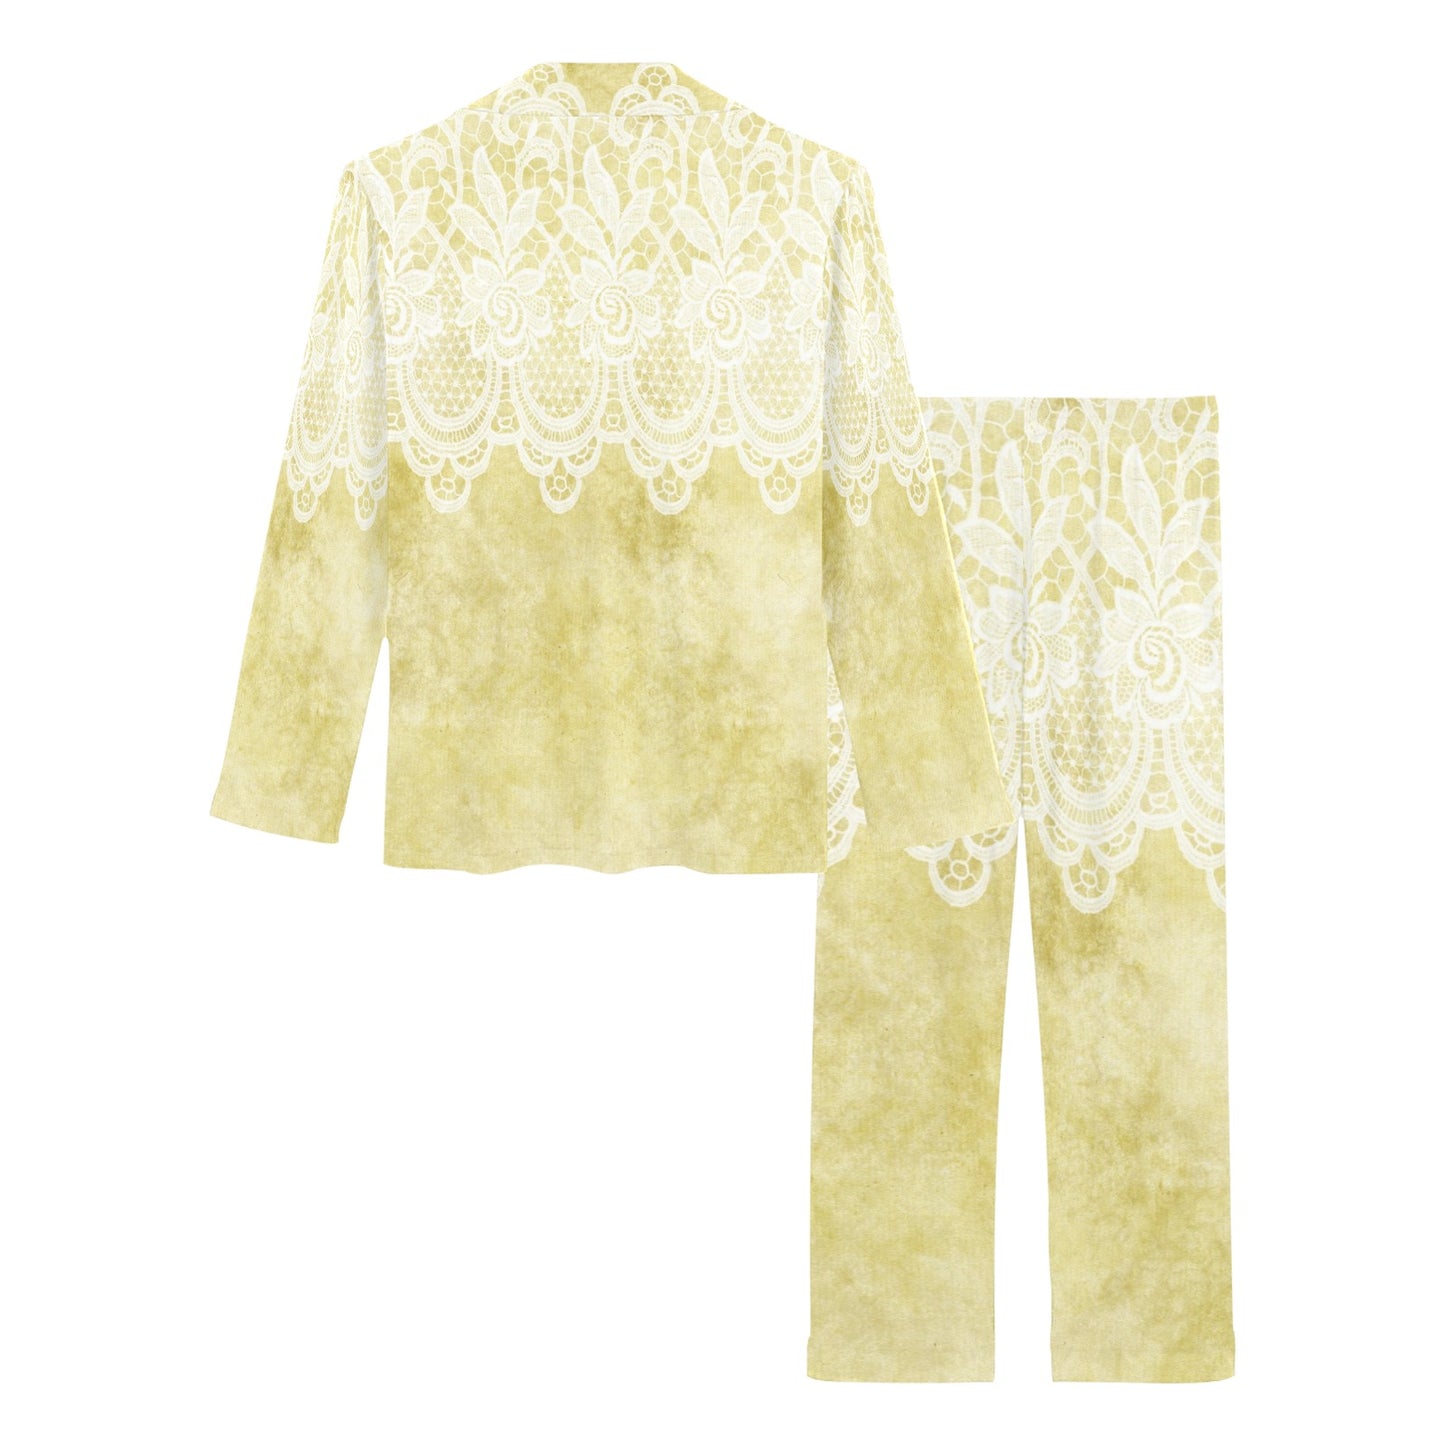 Victorian printed lace pajama set, design 44 Women's Long Pajama Set (Sets 02)